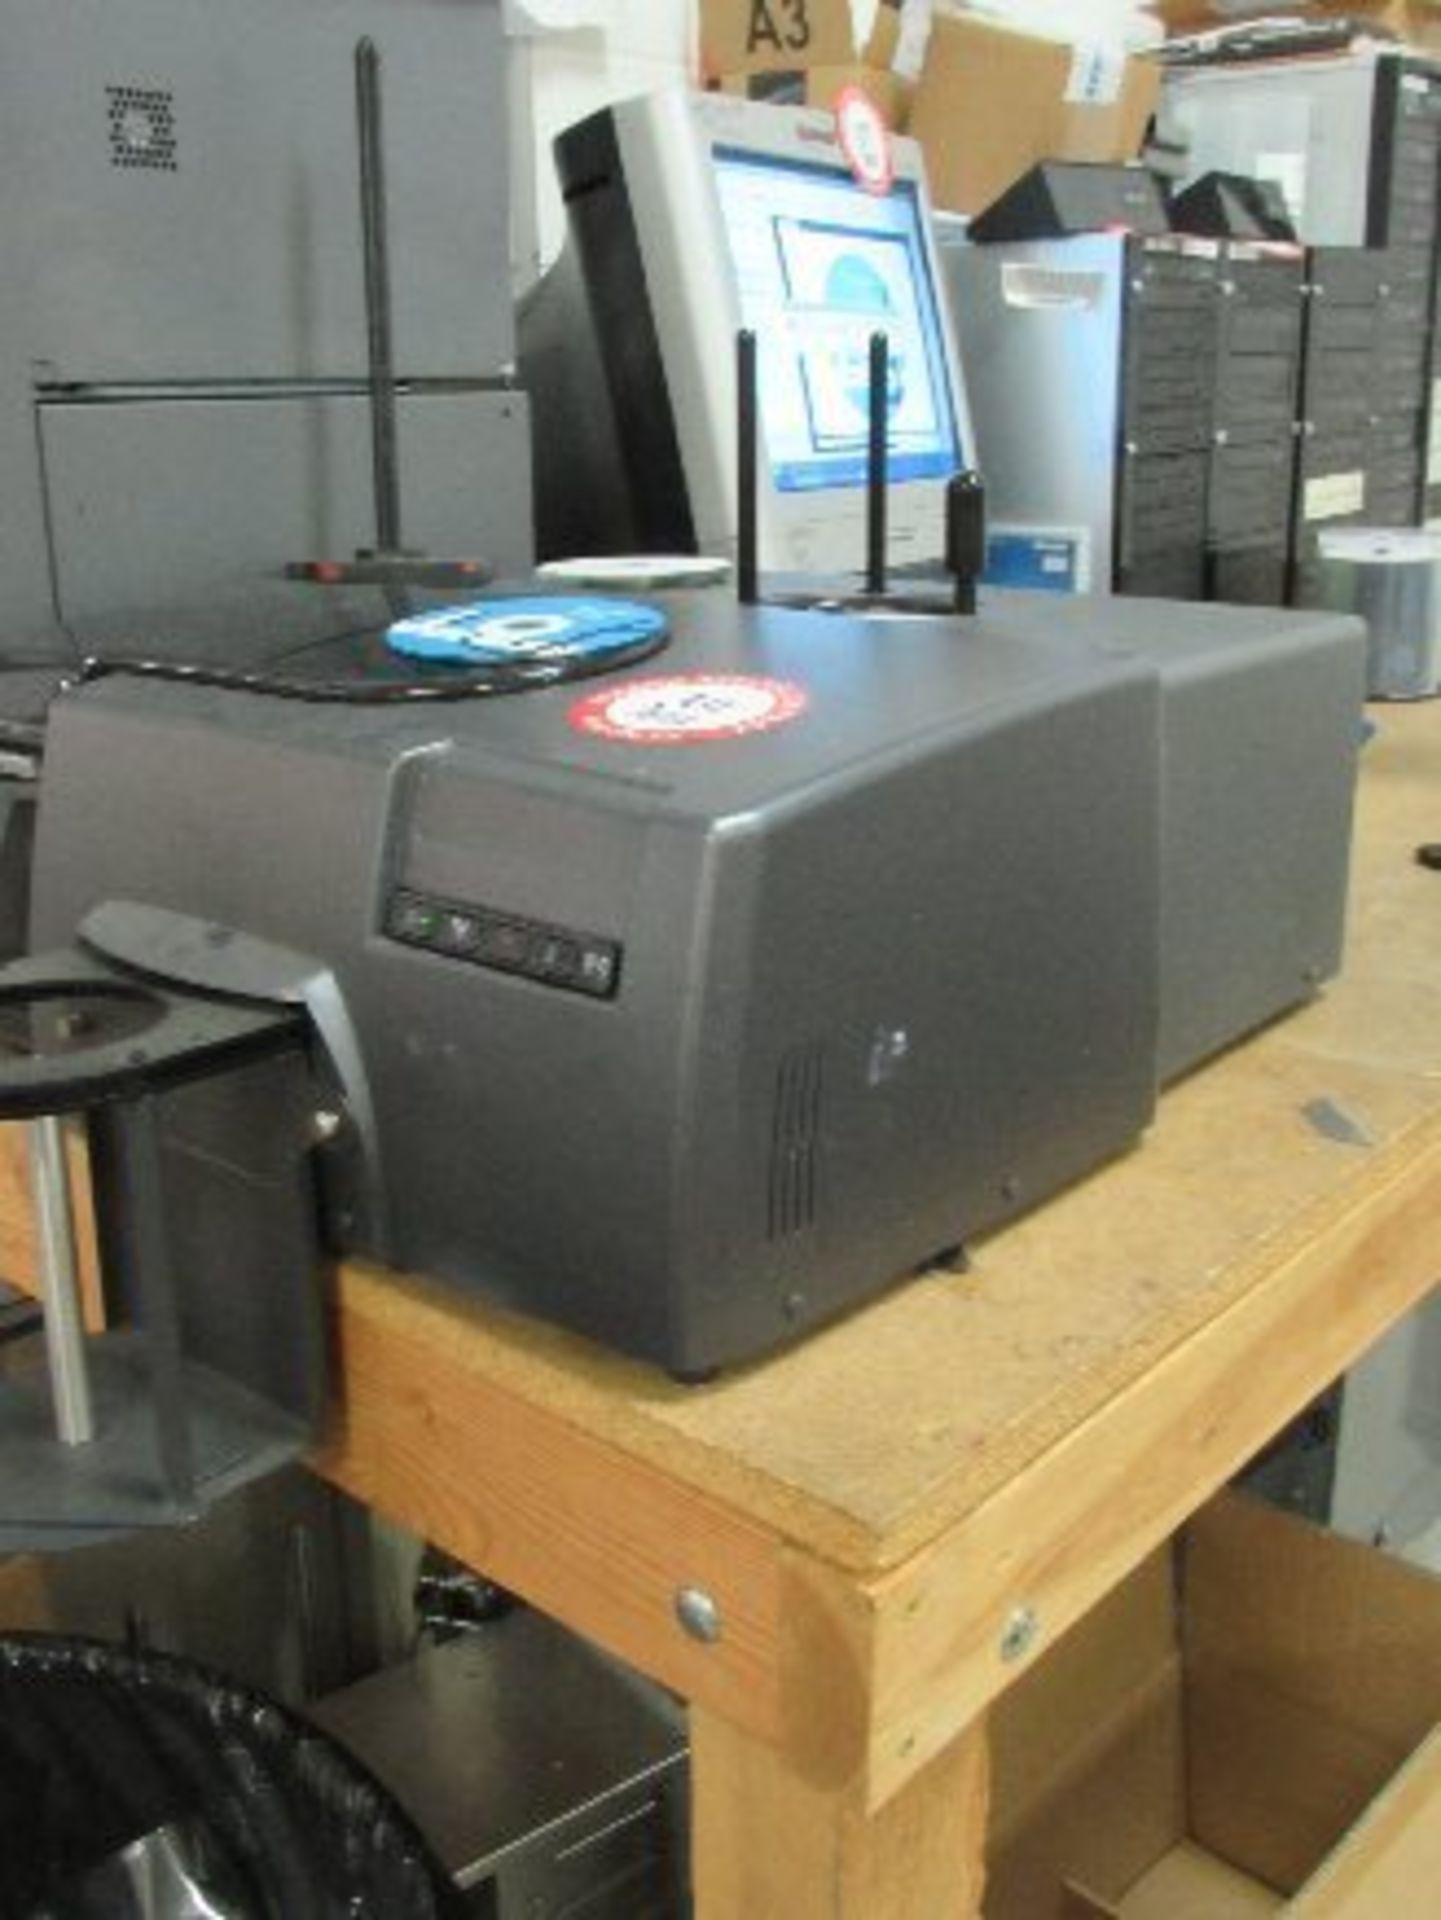 Micro Boards Technology Mdl. PFP-1000-01 CD Ink Jet Printer, S/N PFP000751 - Image 2 of 2